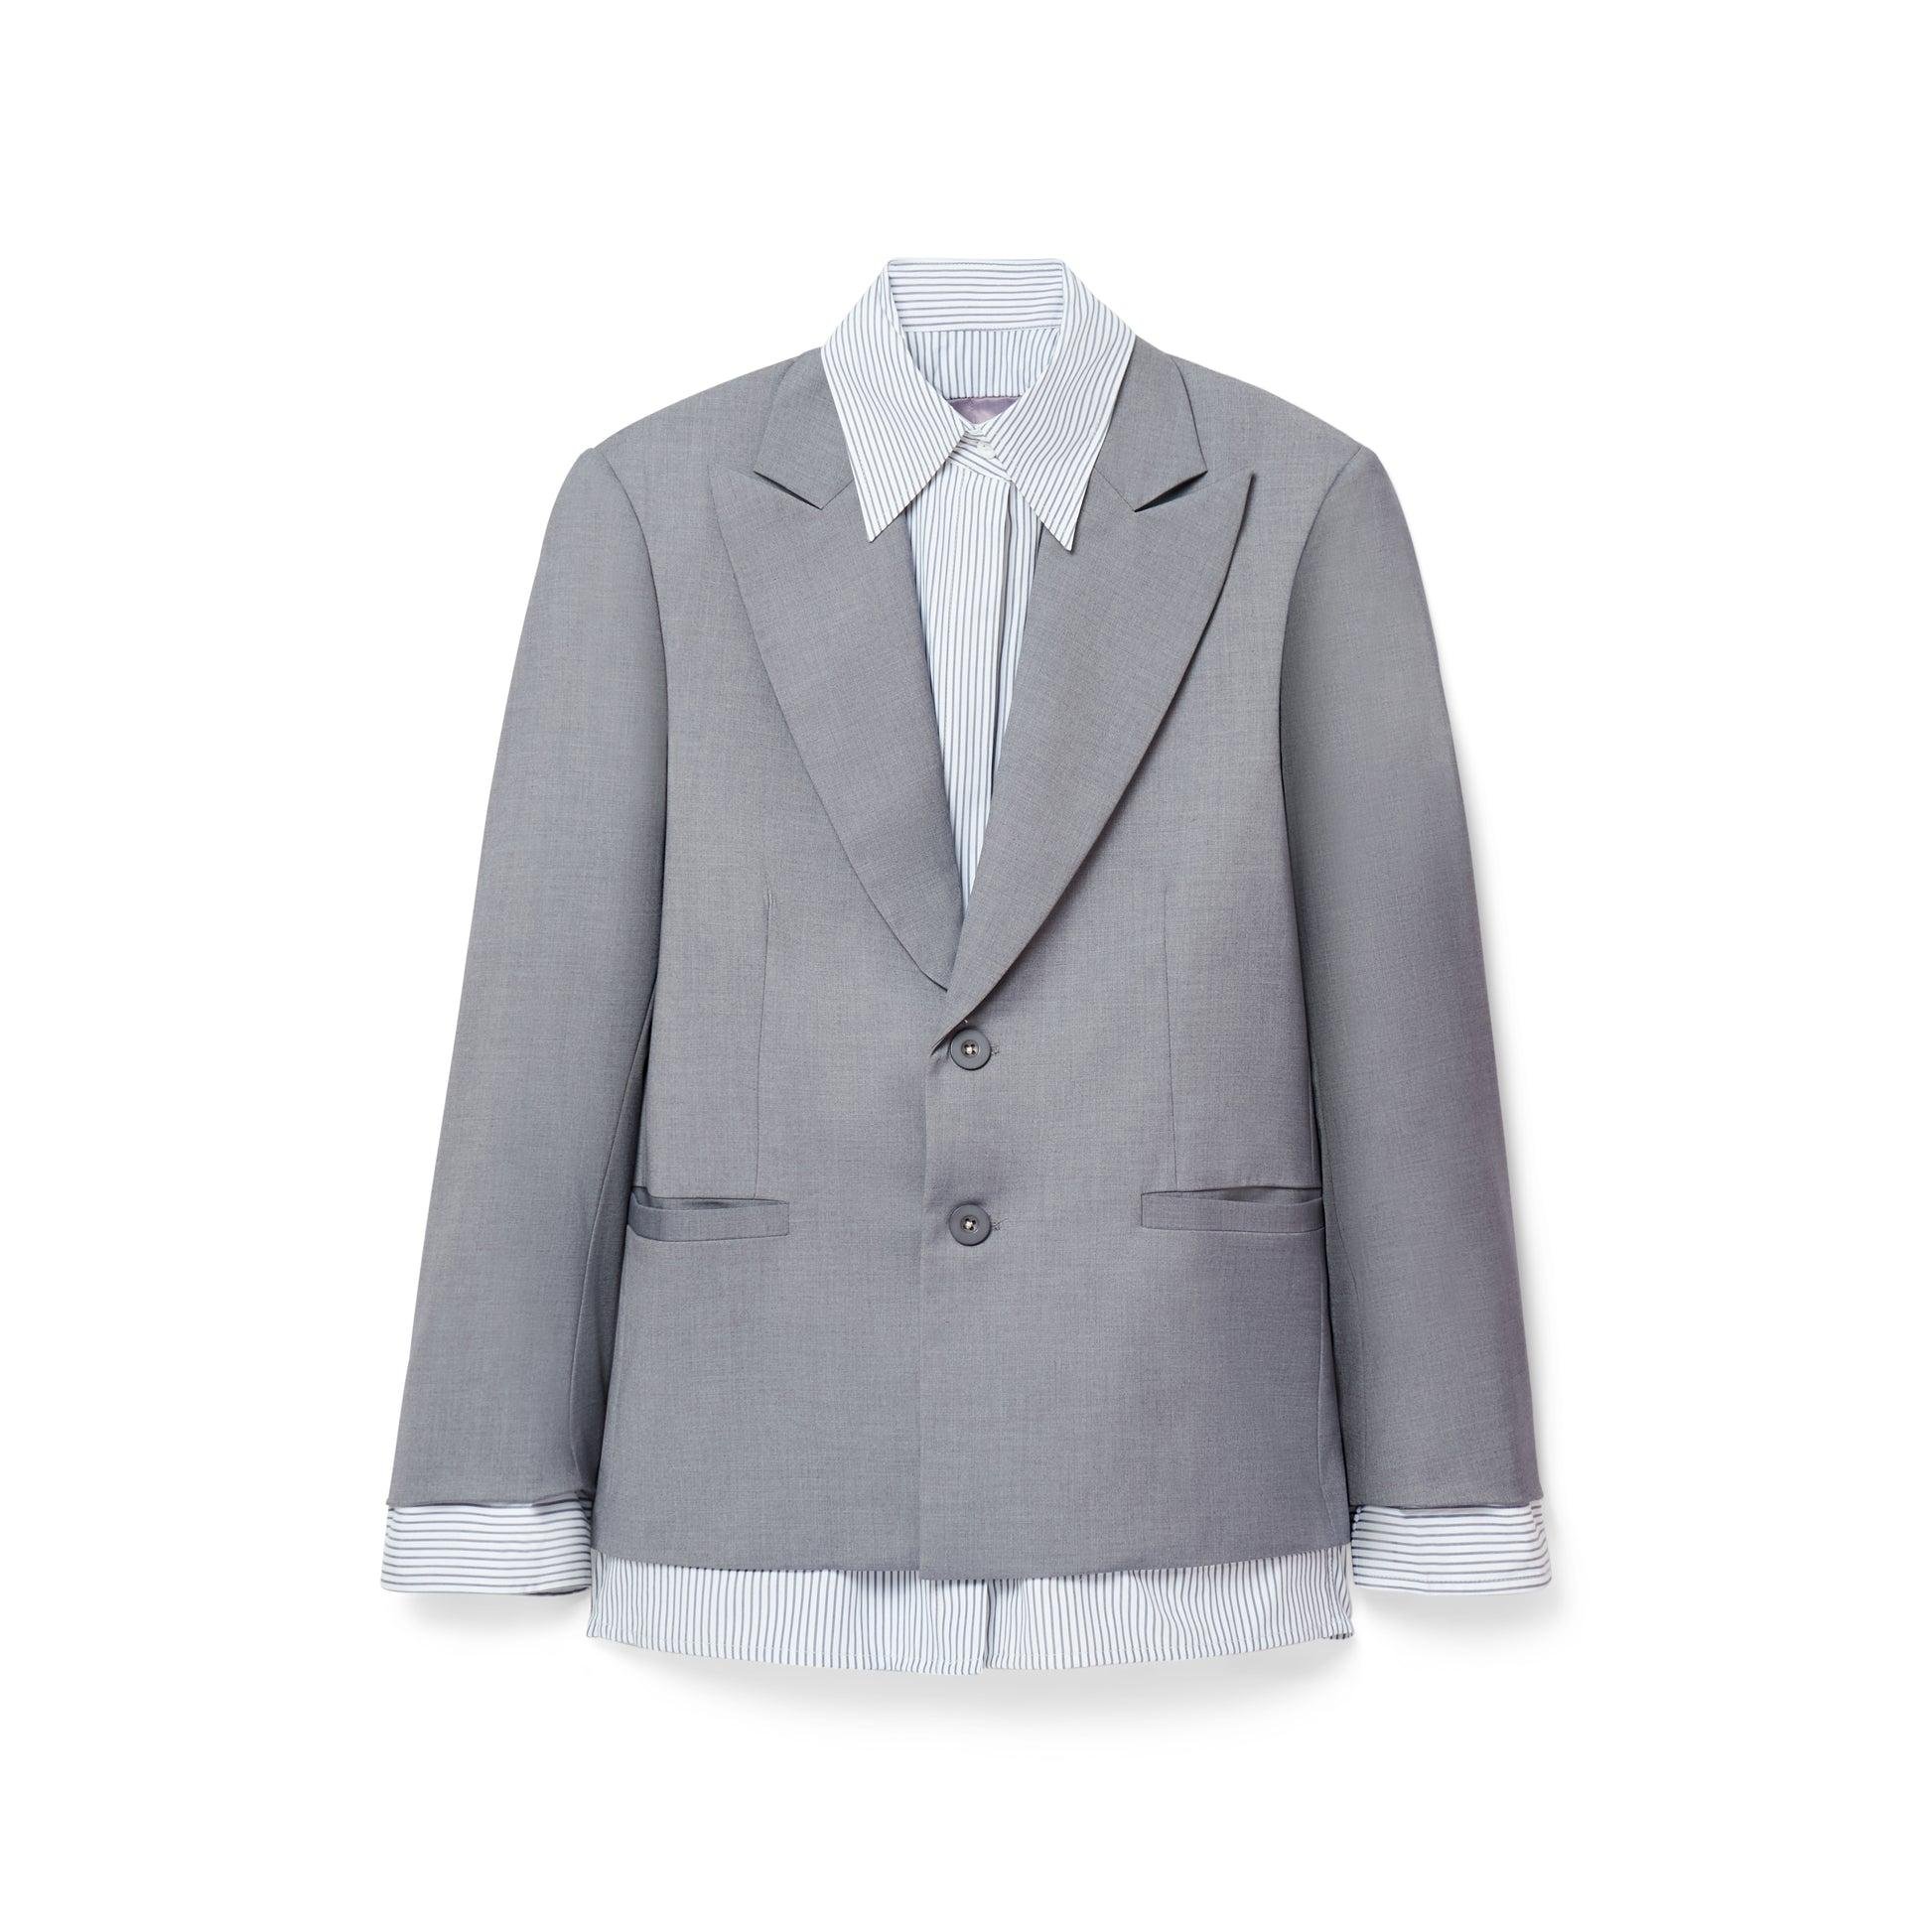 All in 1 suit Top [Grey] by KIDSUPER STUDIOS